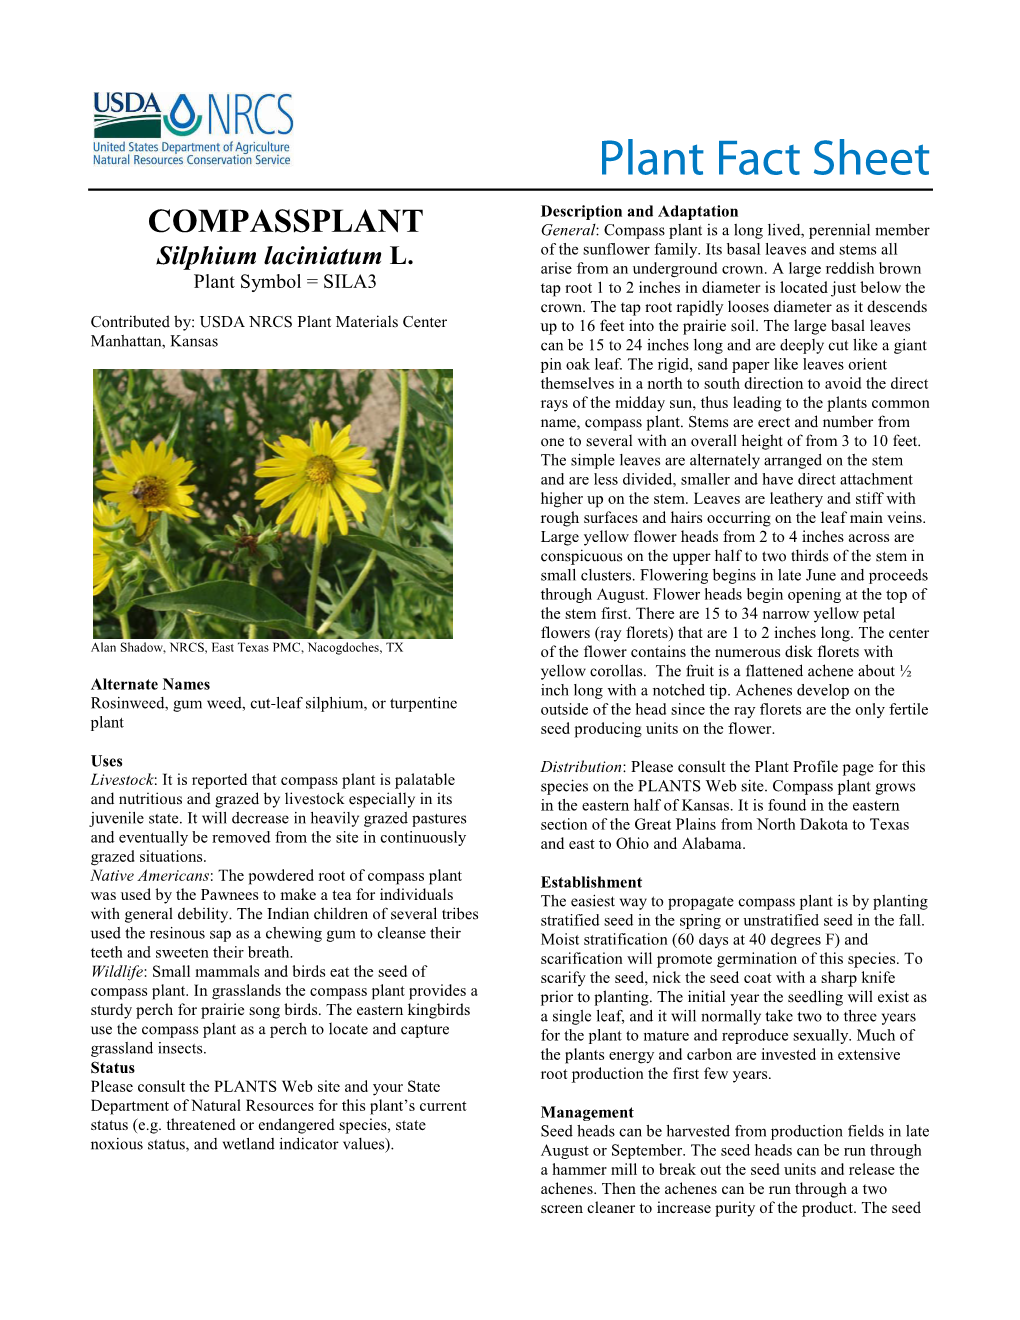 Plant Fact Sheet: Compass Plant